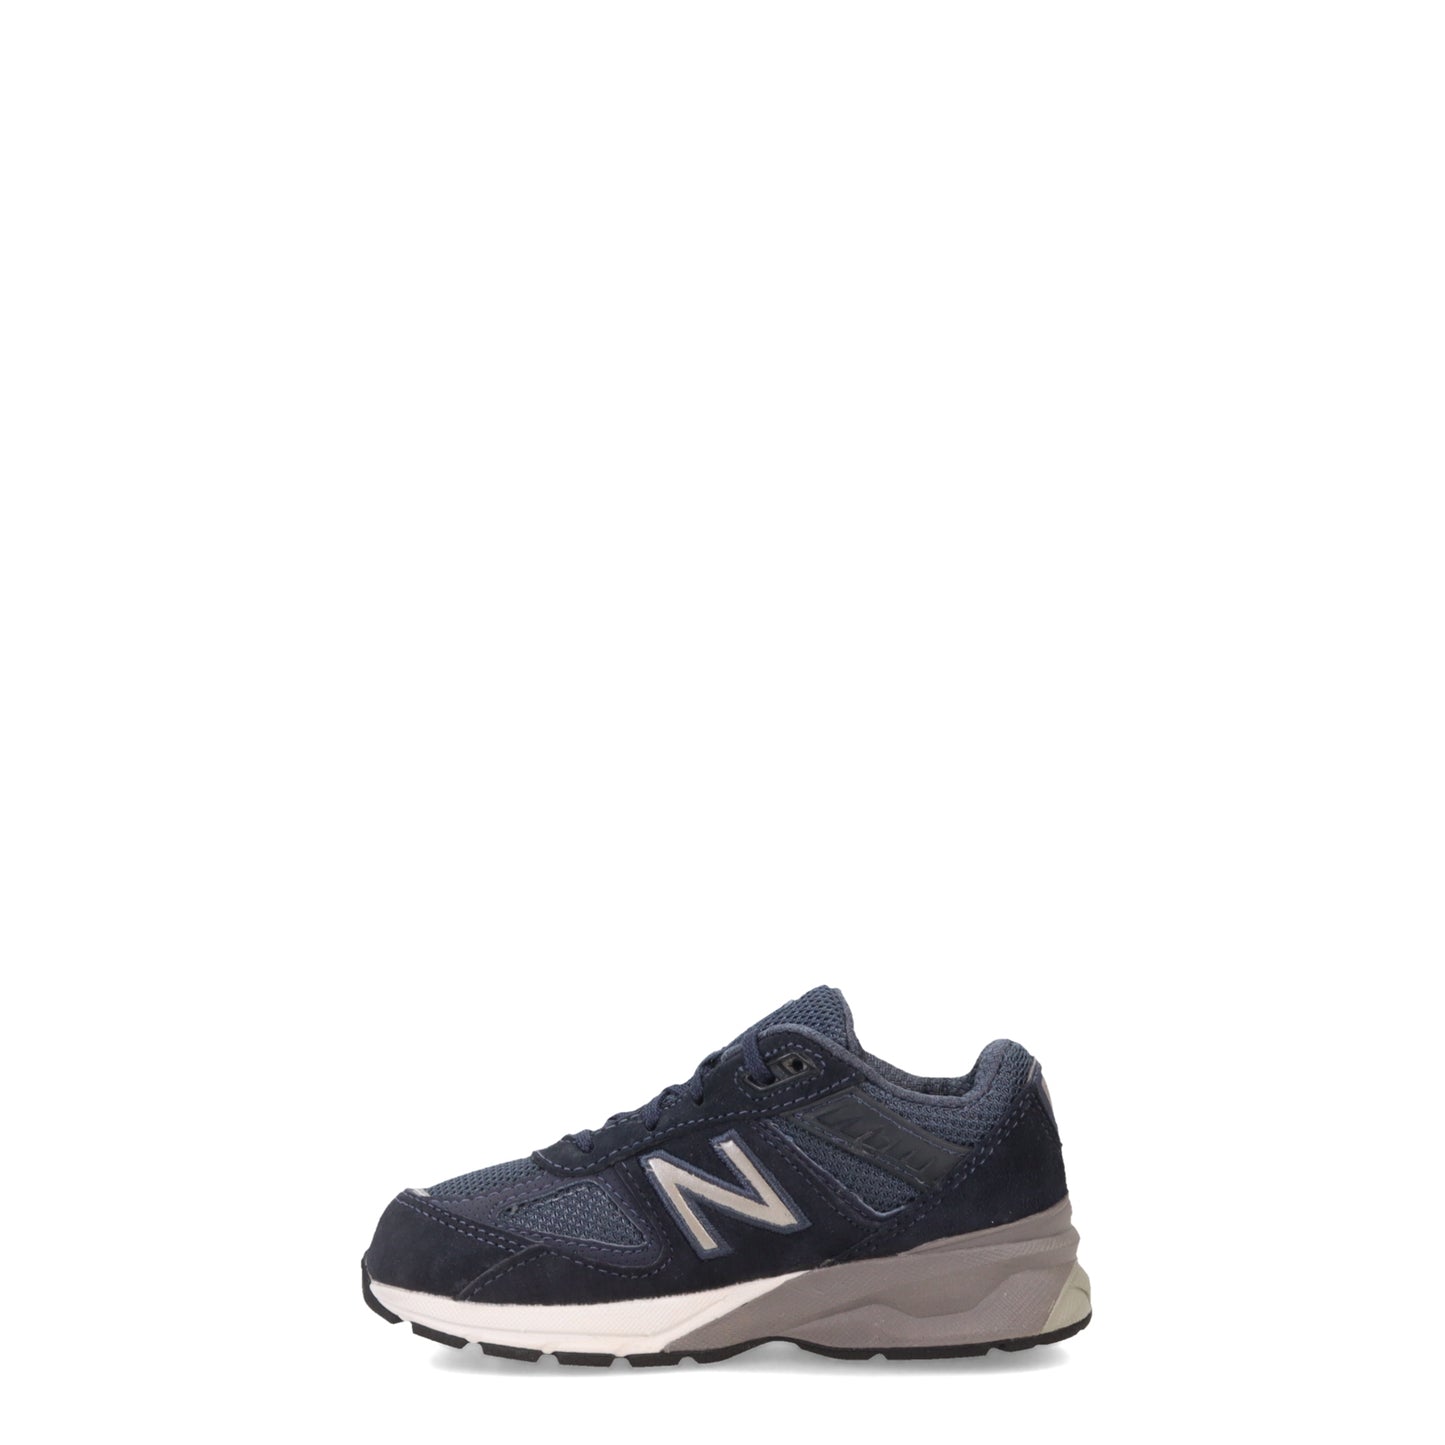 Peltz Shoes  Boy's New Balance 990v5 Sneaker - Toddler Navy IC990NV5